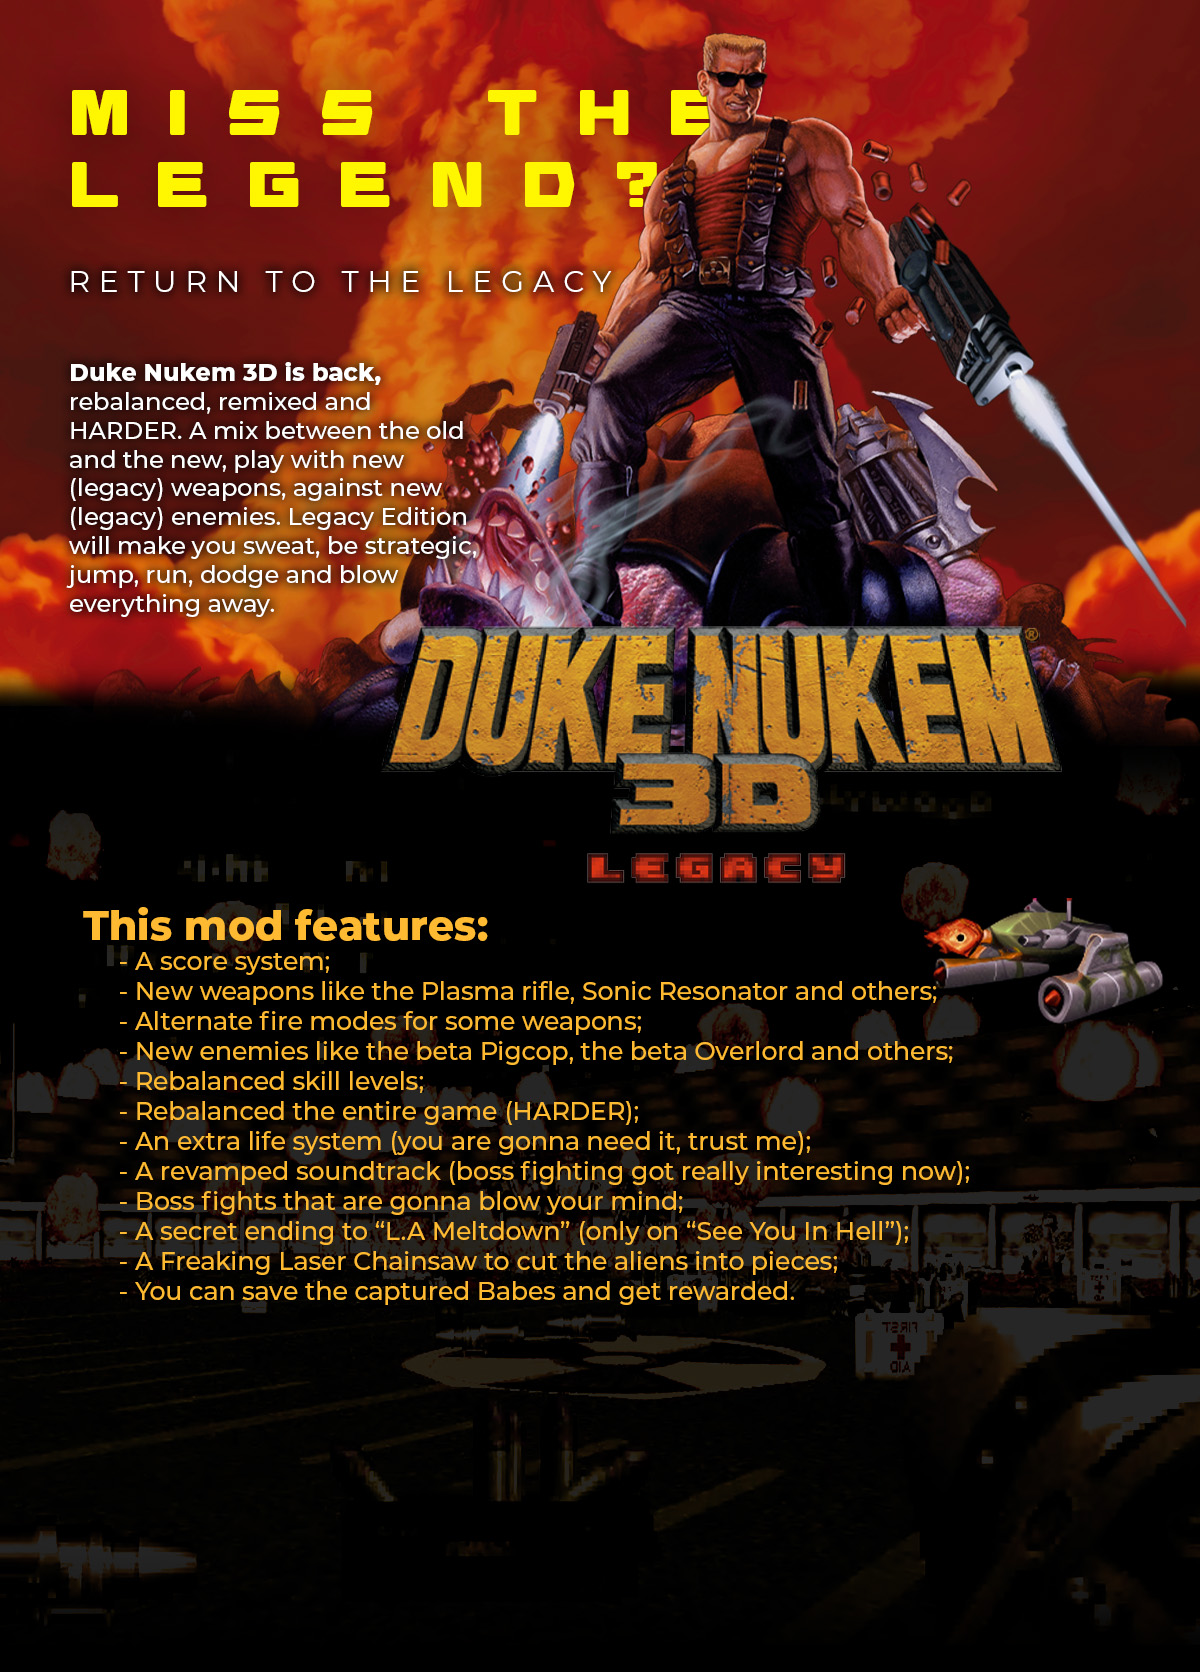 Duke Nukem 3D Legacy Edition Description Banner